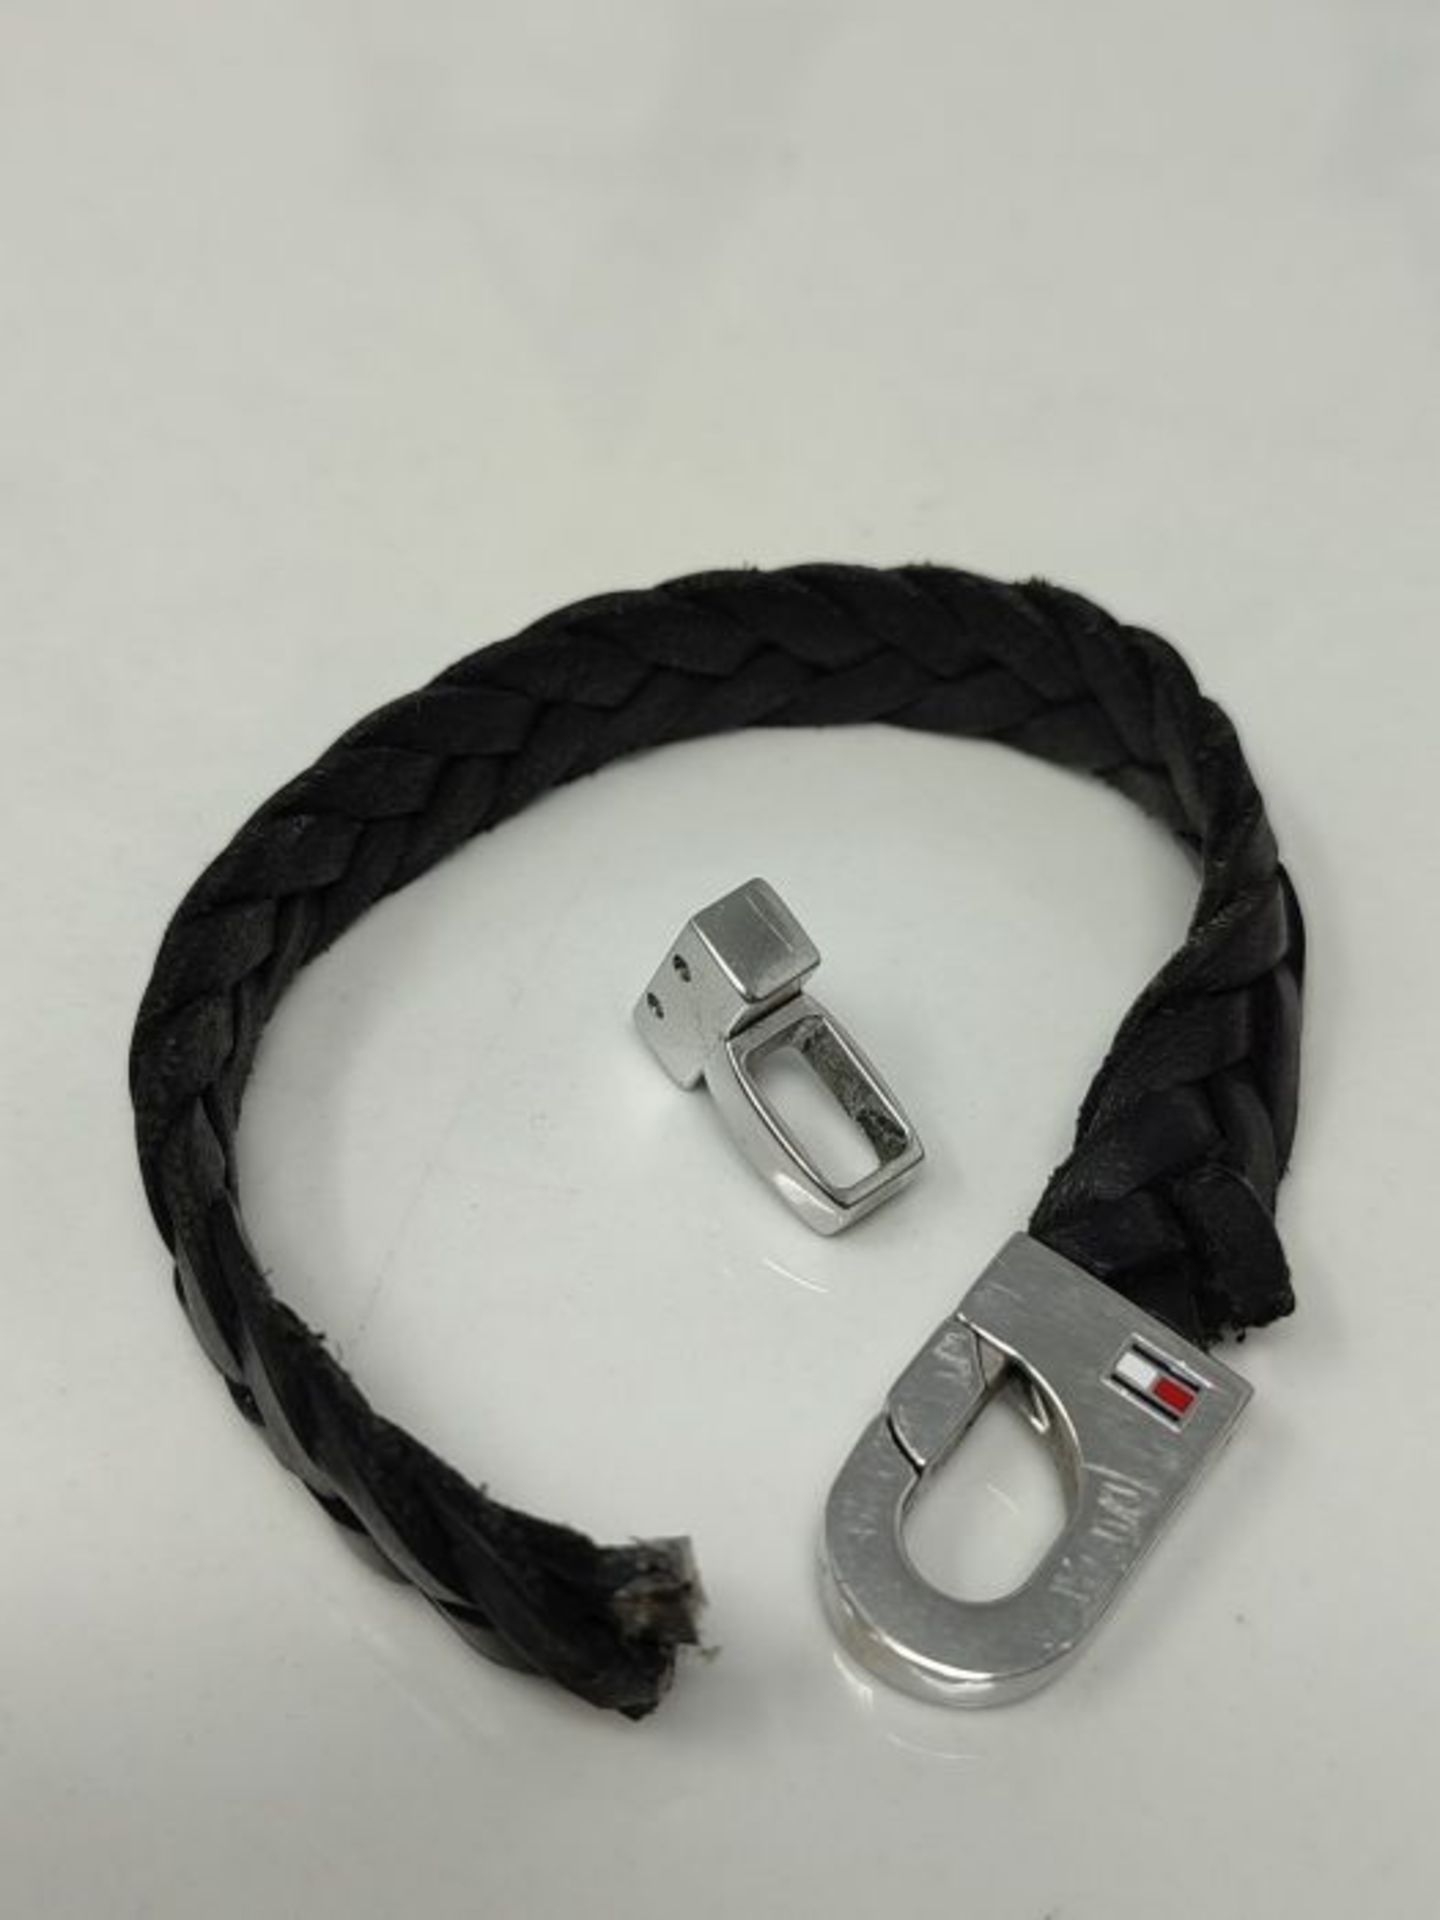 RRP £52.00 [CRACKED] Tommy Hilfiger Jewelry Men's Leather Bracelet Black - 2700872 - Image 2 of 2